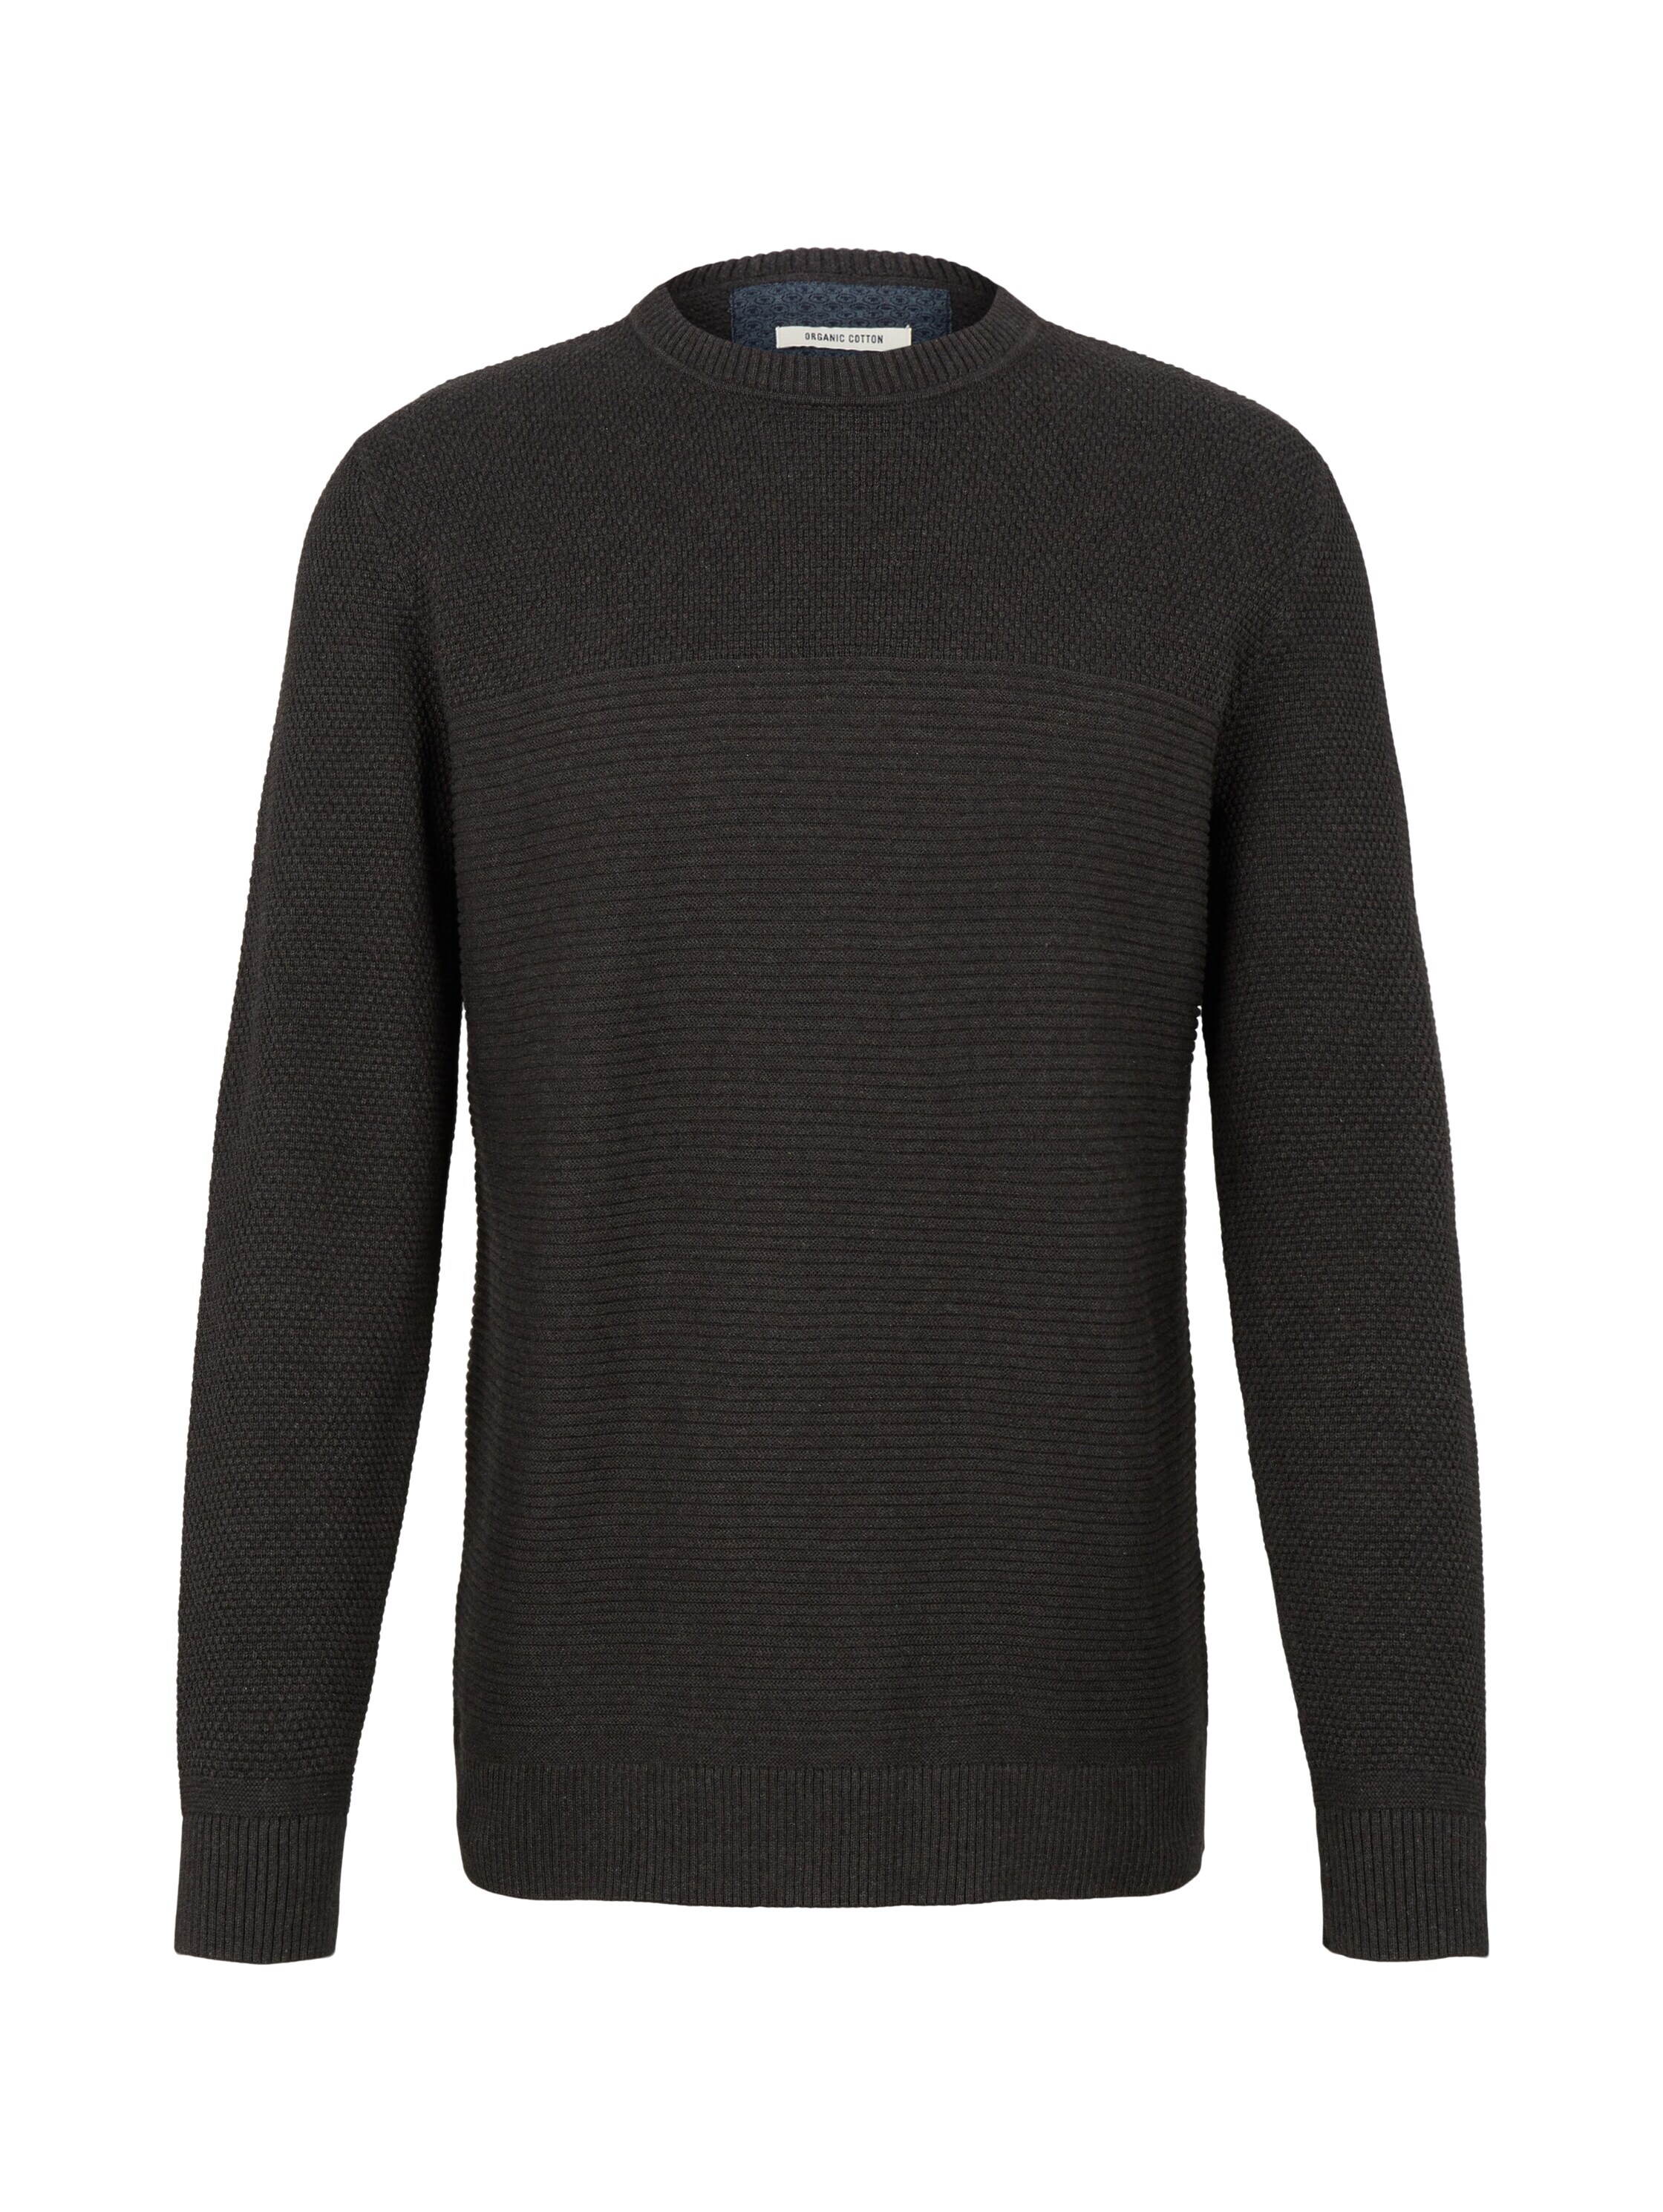 Пуловер Tom Tailor, серый пуловер tom tailor размер m серый